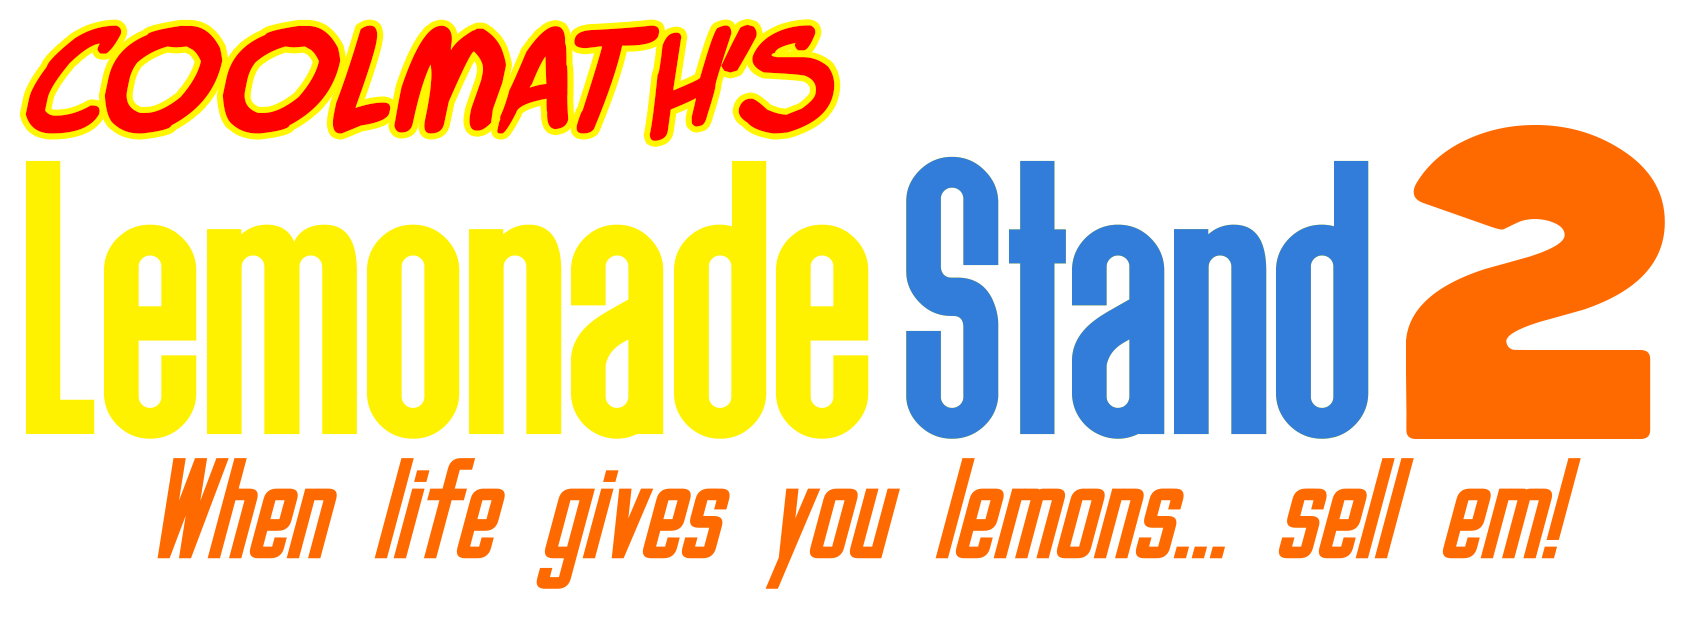 lemonade stand cool math games recipe